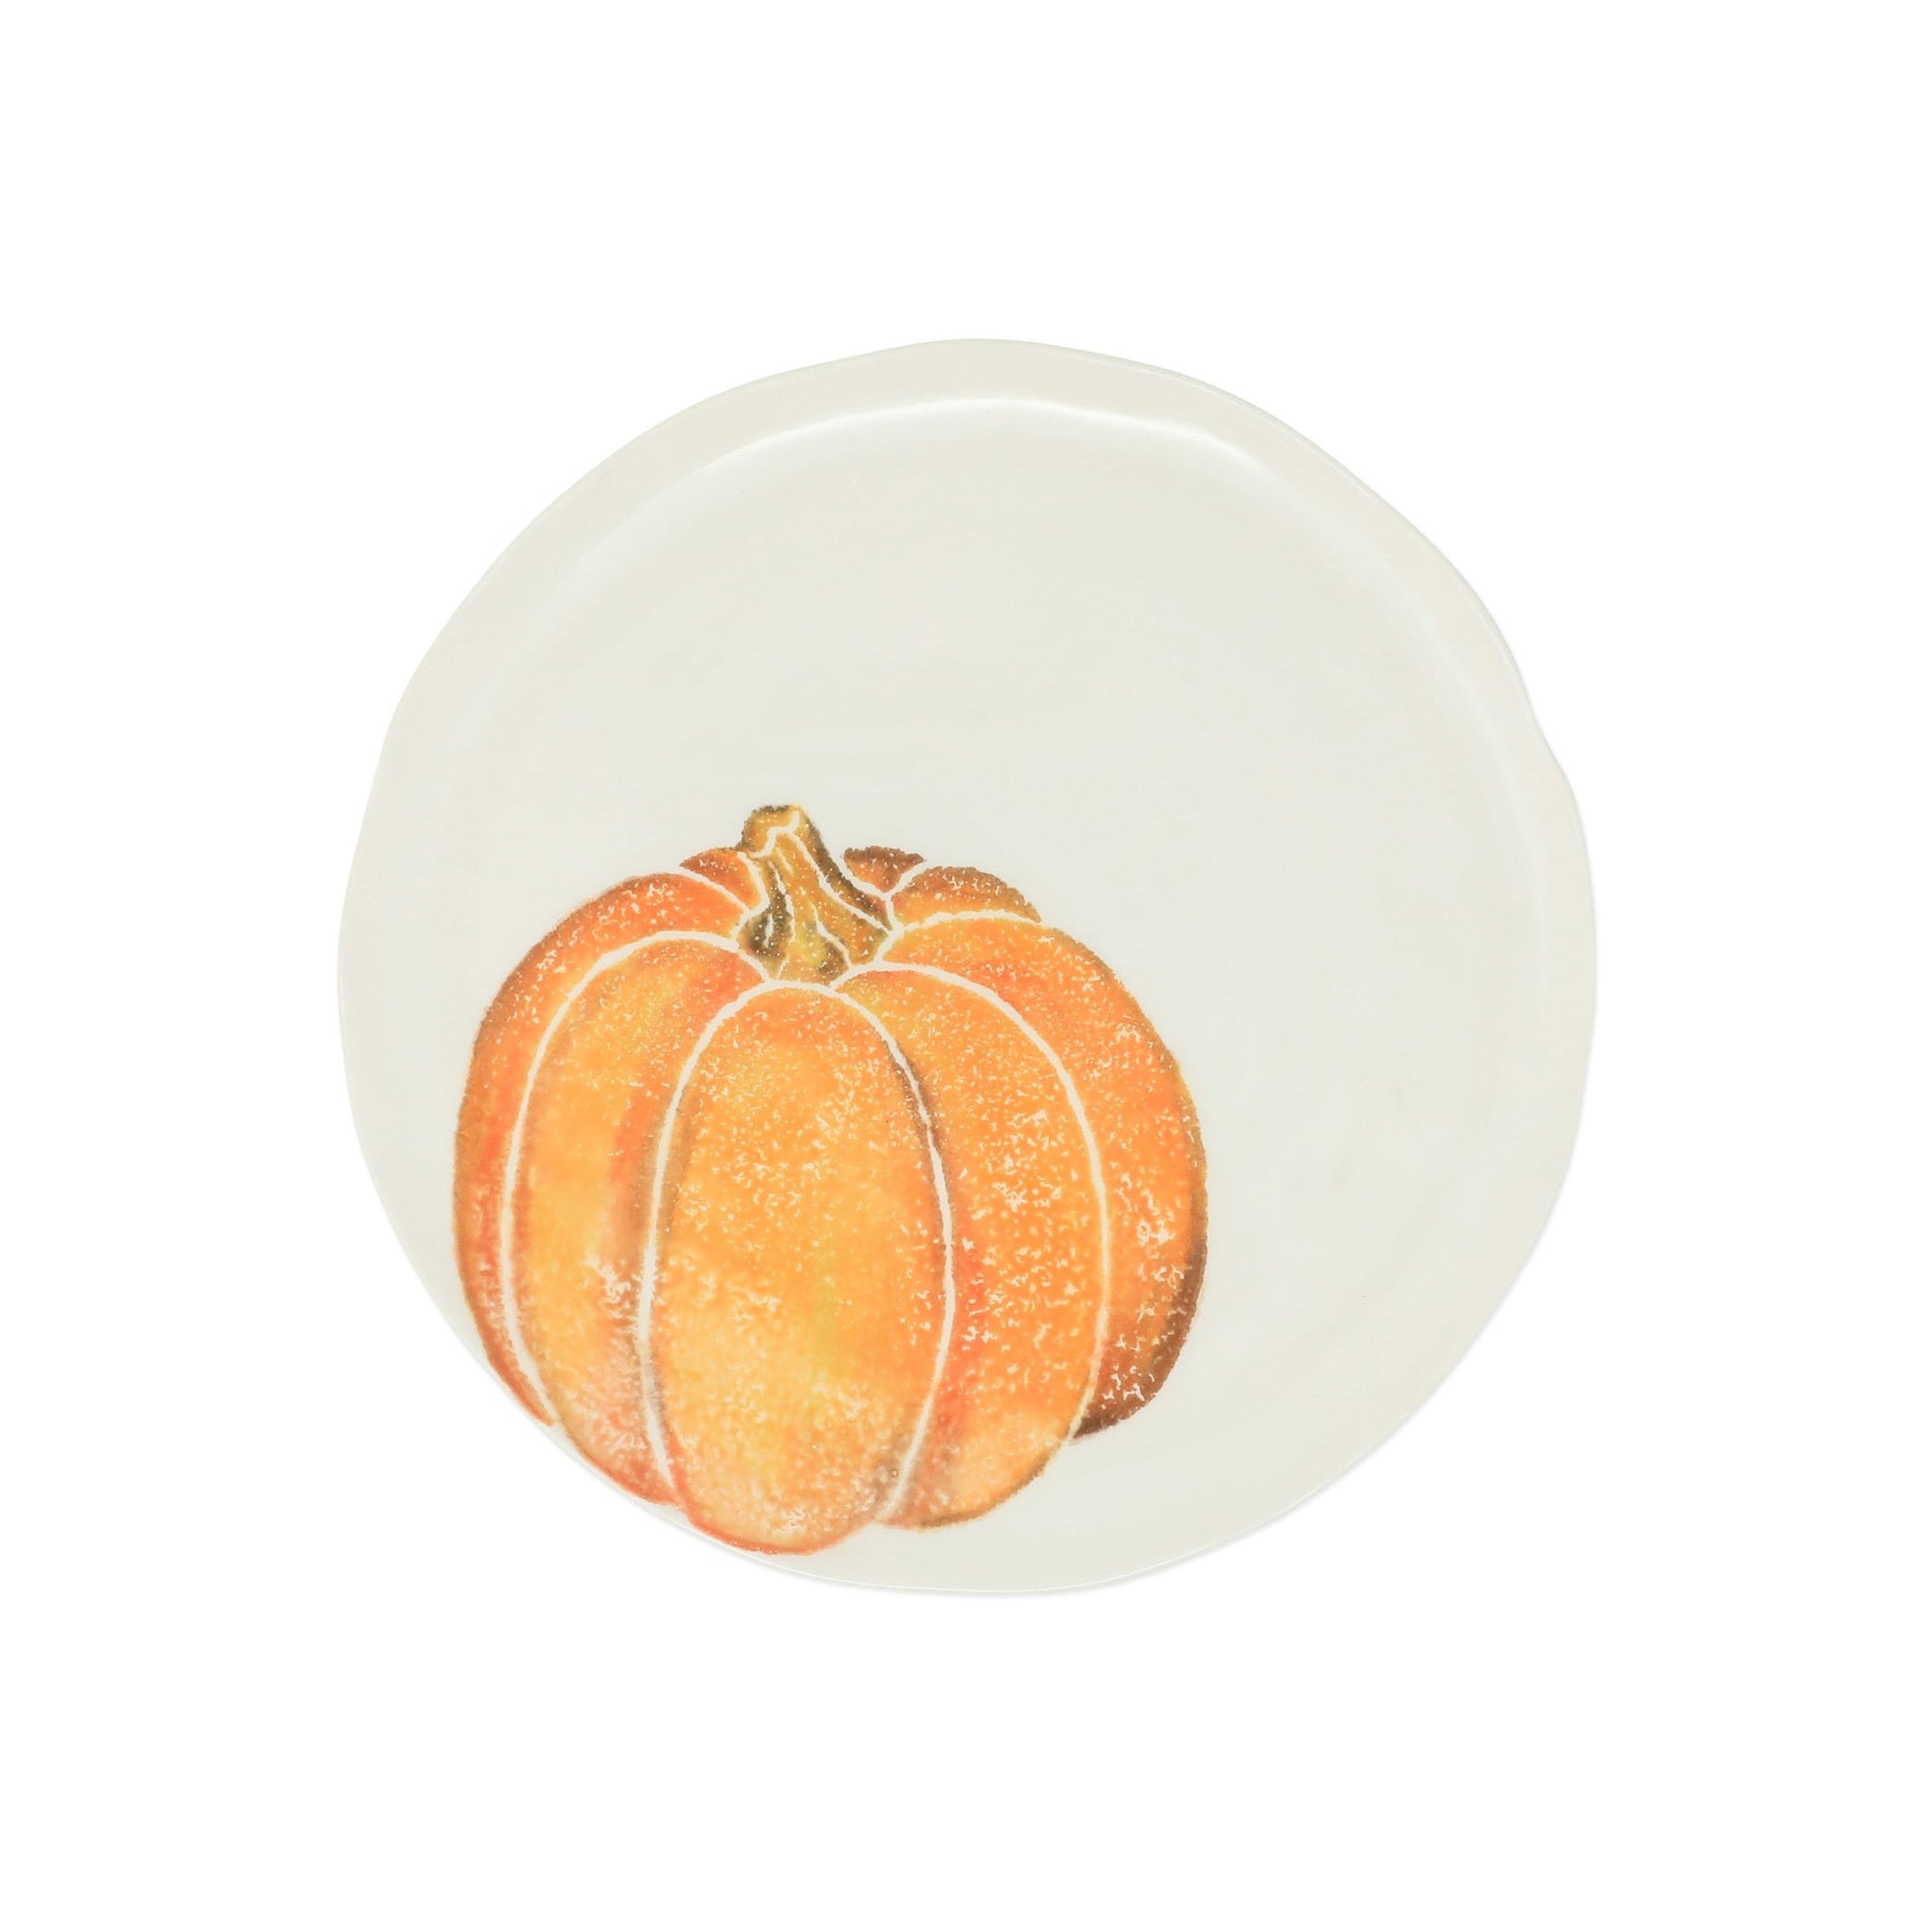 VIETRI: Pumpkins Salad Plate - Orange Small Pumpkin - Artistica.com